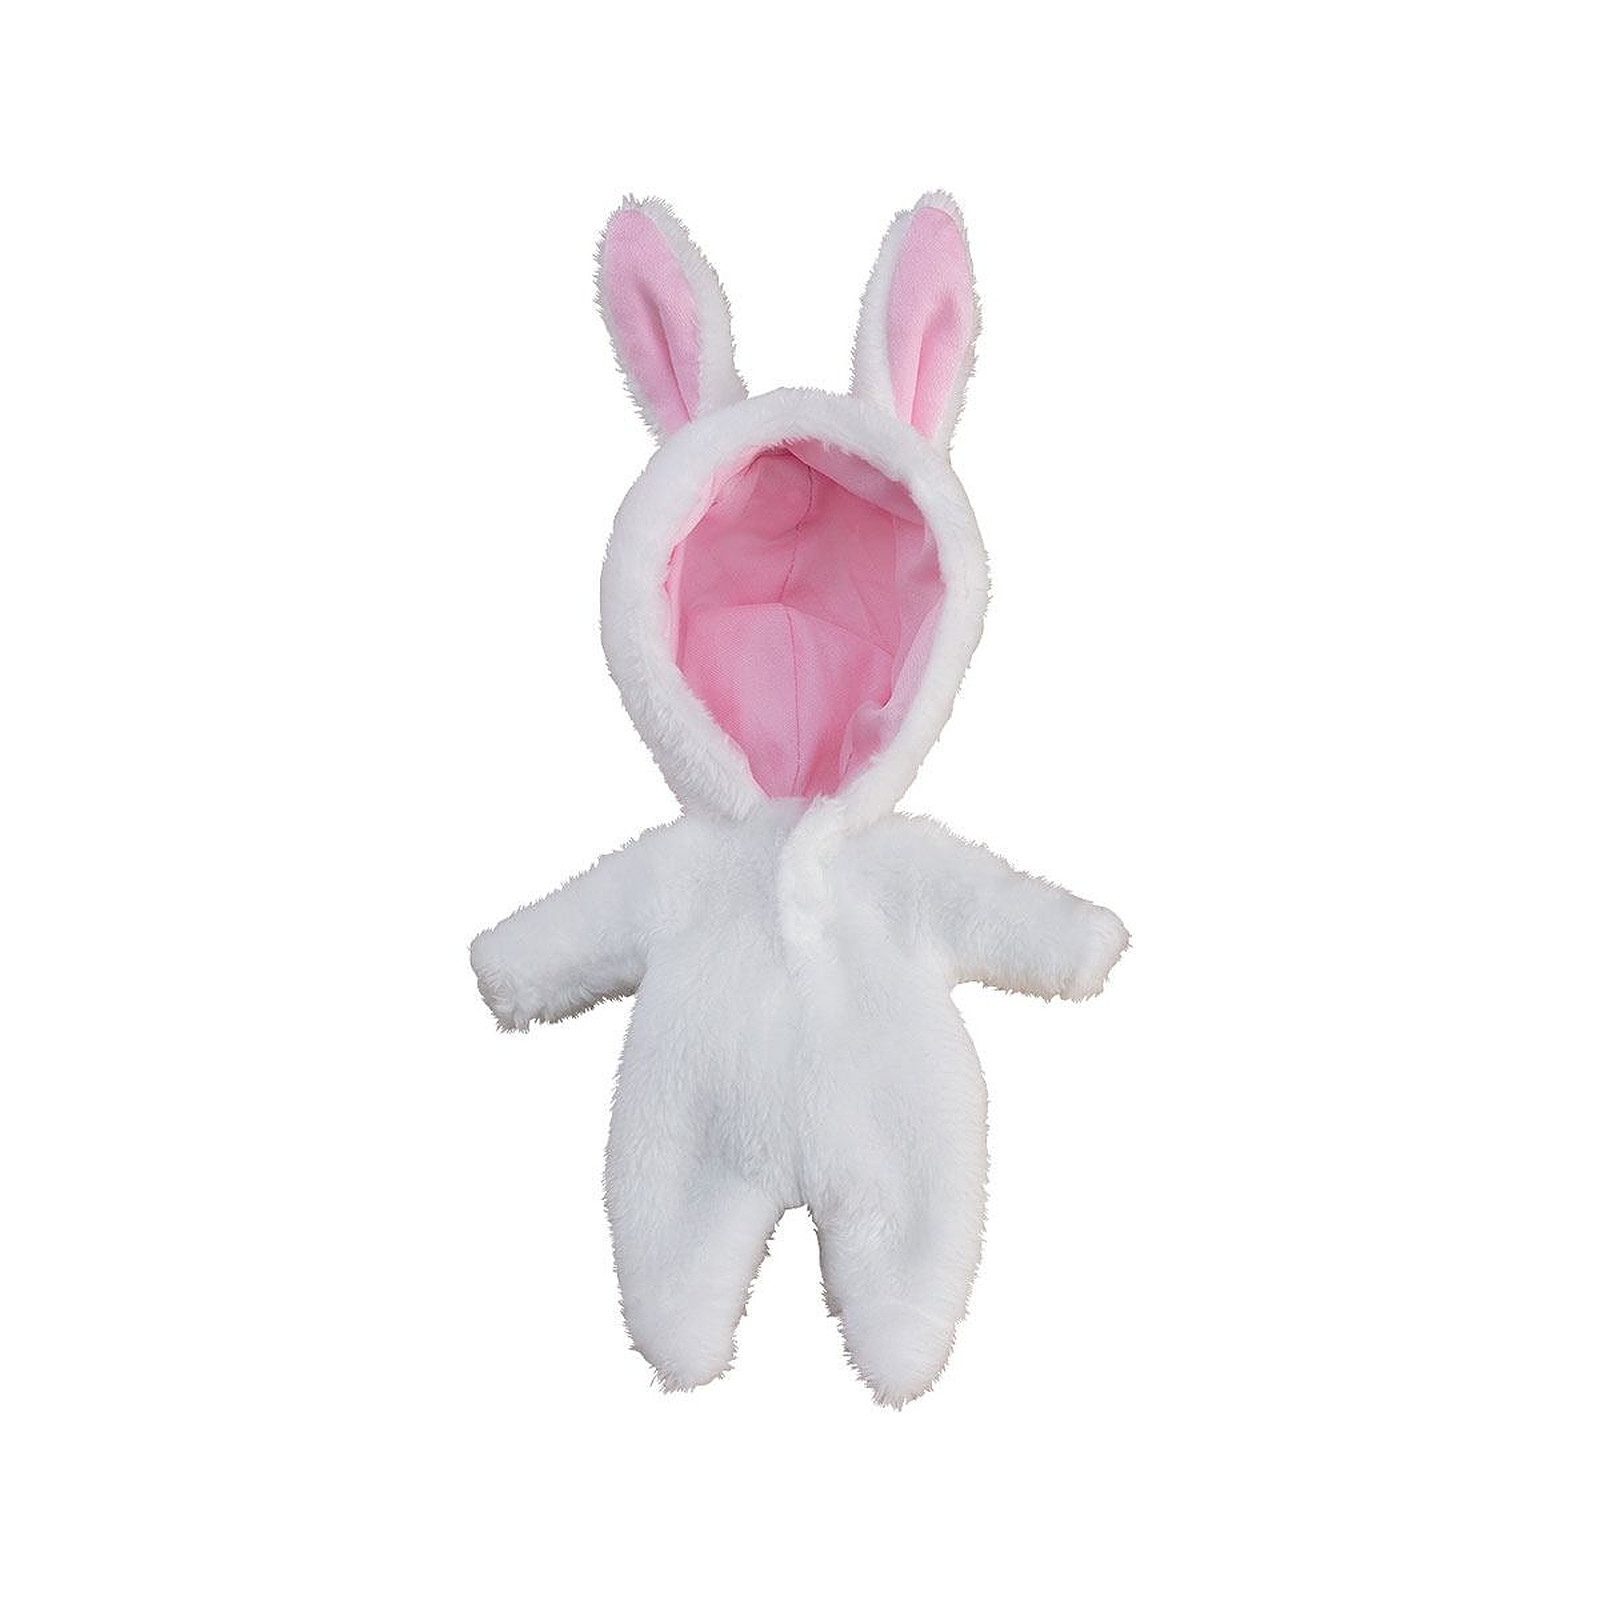 Original Character - Accessoires pour figurines Nendoroid Doll Kigurumi Pajamas (Rabbit - White - Figurines Good Smile Company